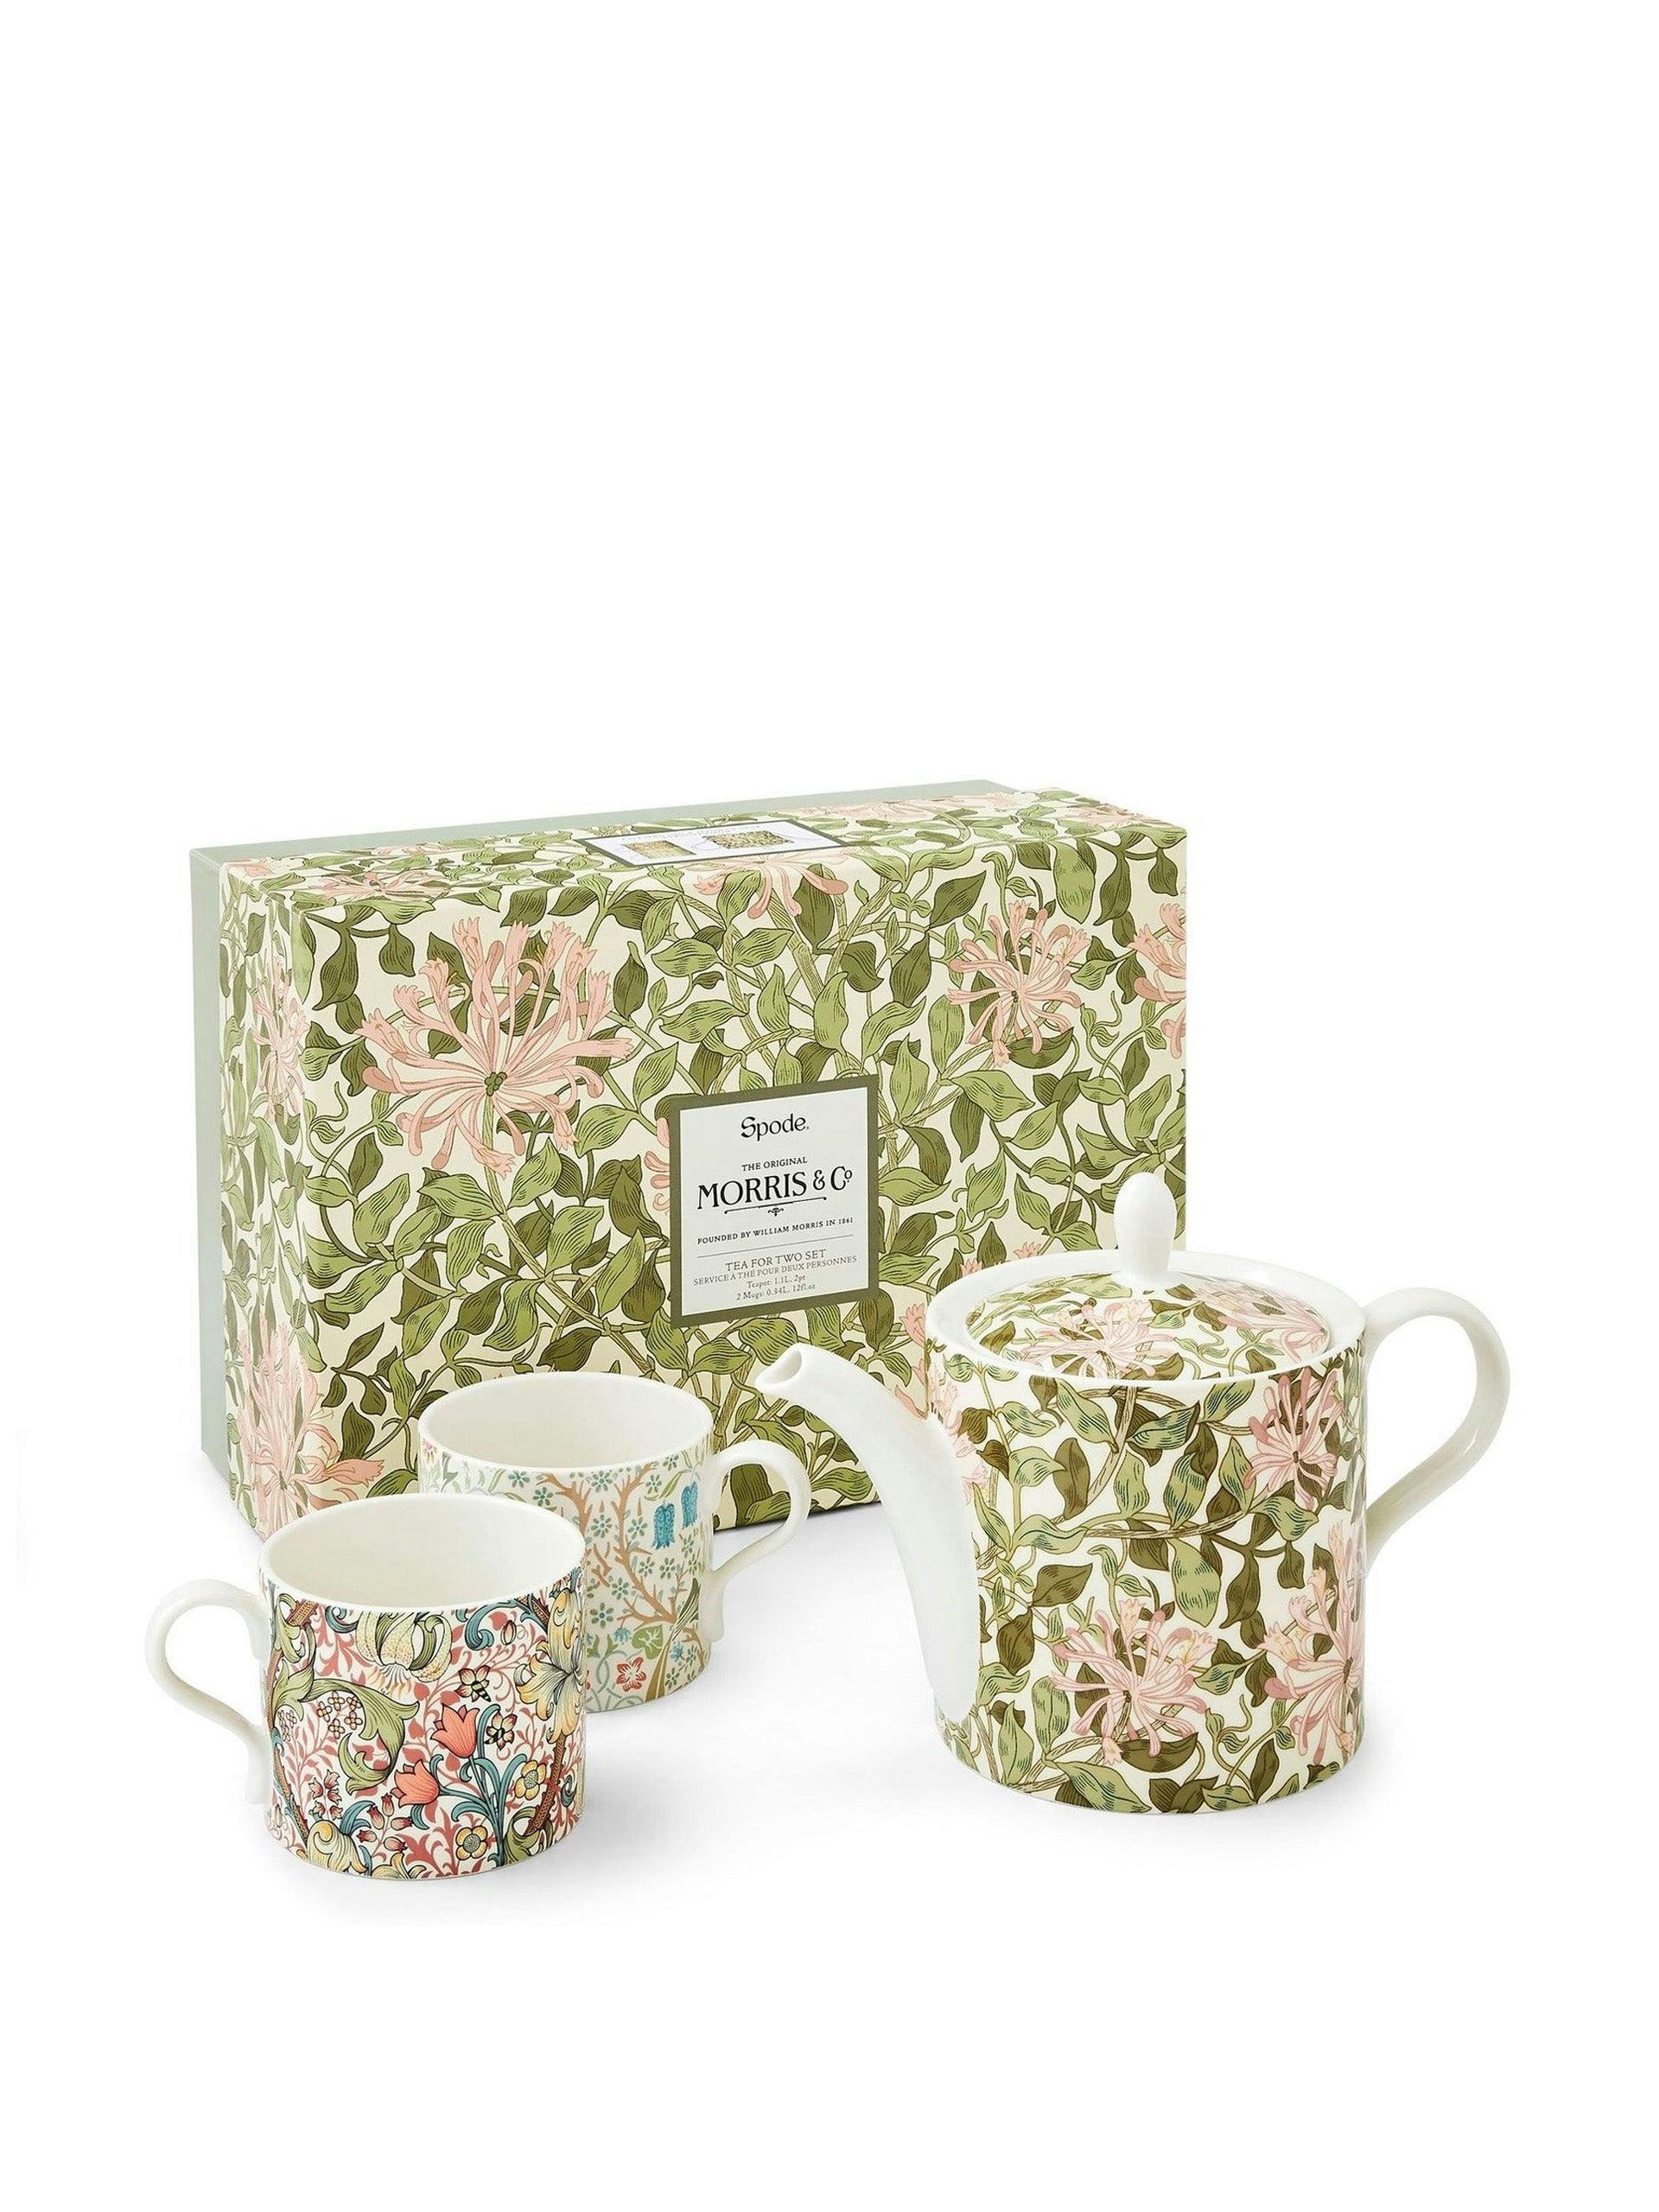 Teapot and mug set